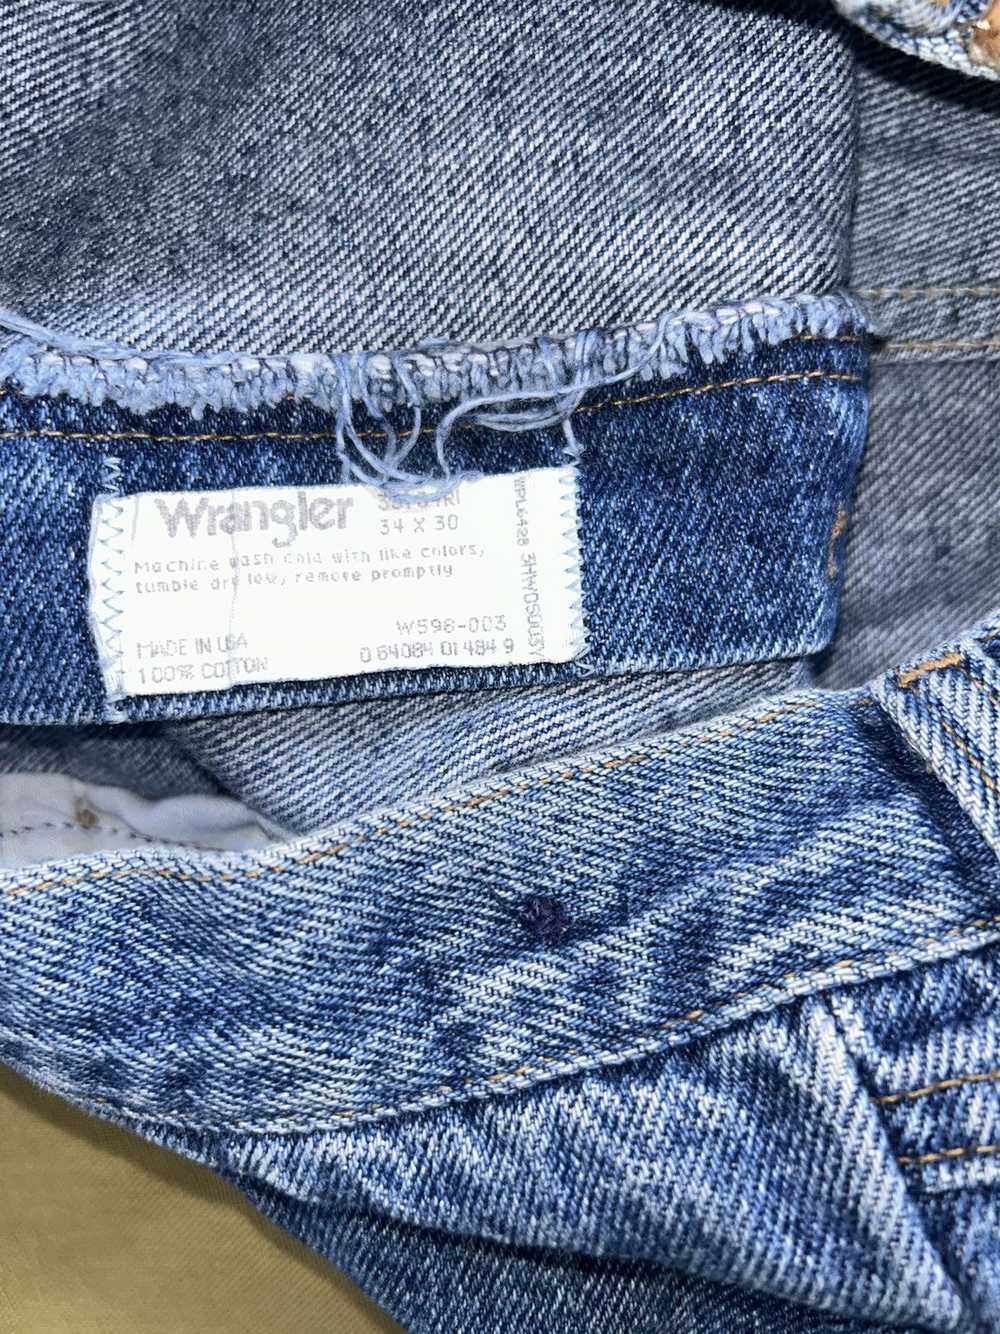 Wrangler Vintage Wrangler jeans - image 3